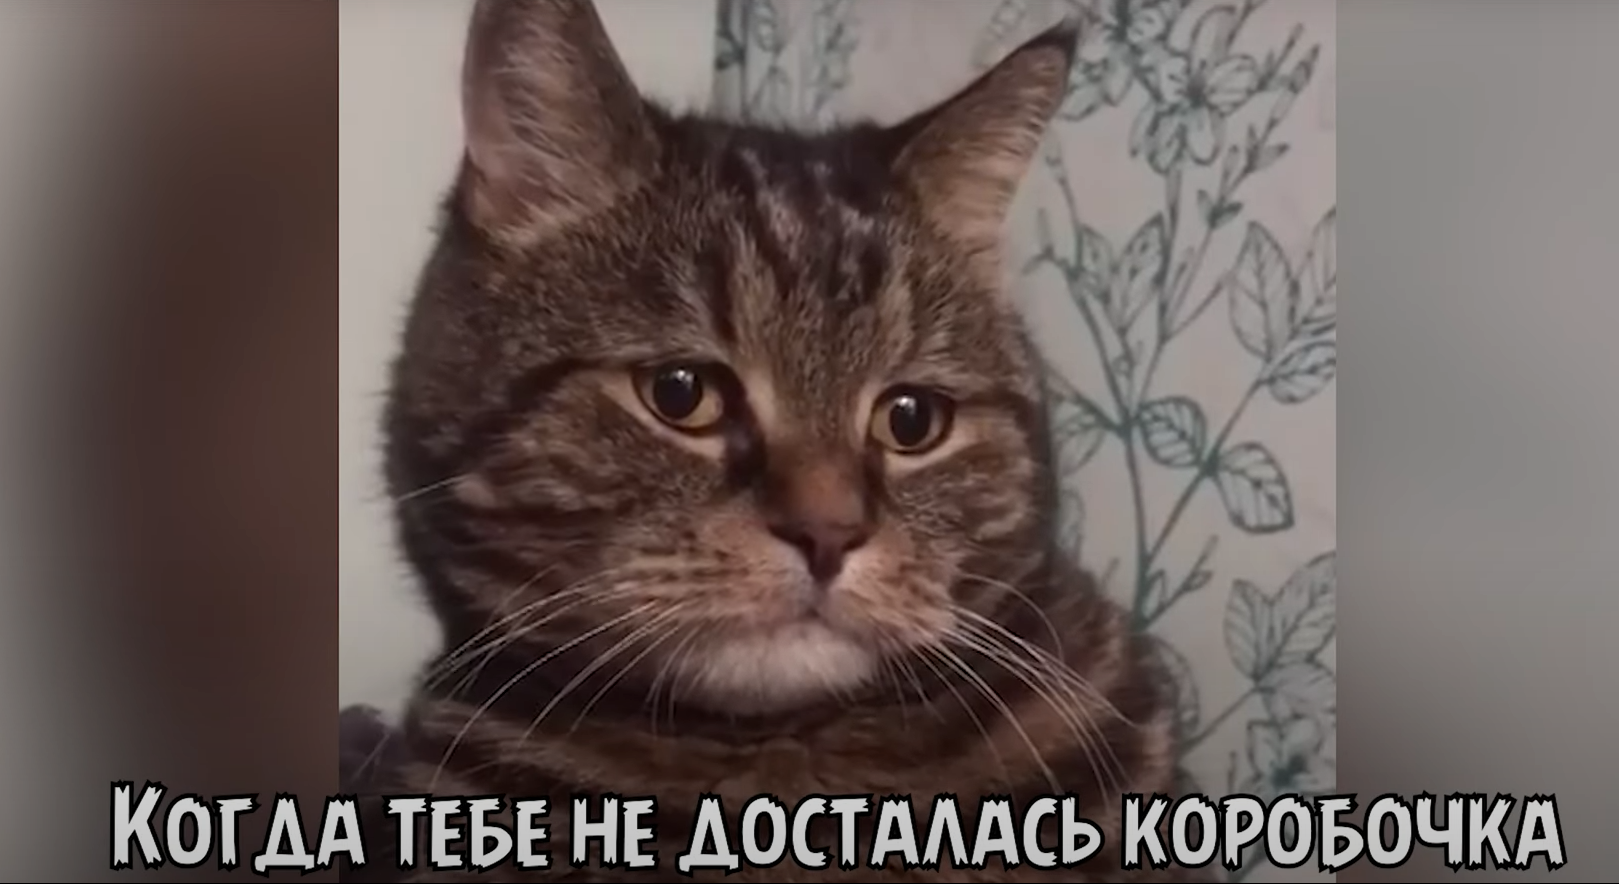 When you didn't get the box - cat, Box, Humor, Yakubovich